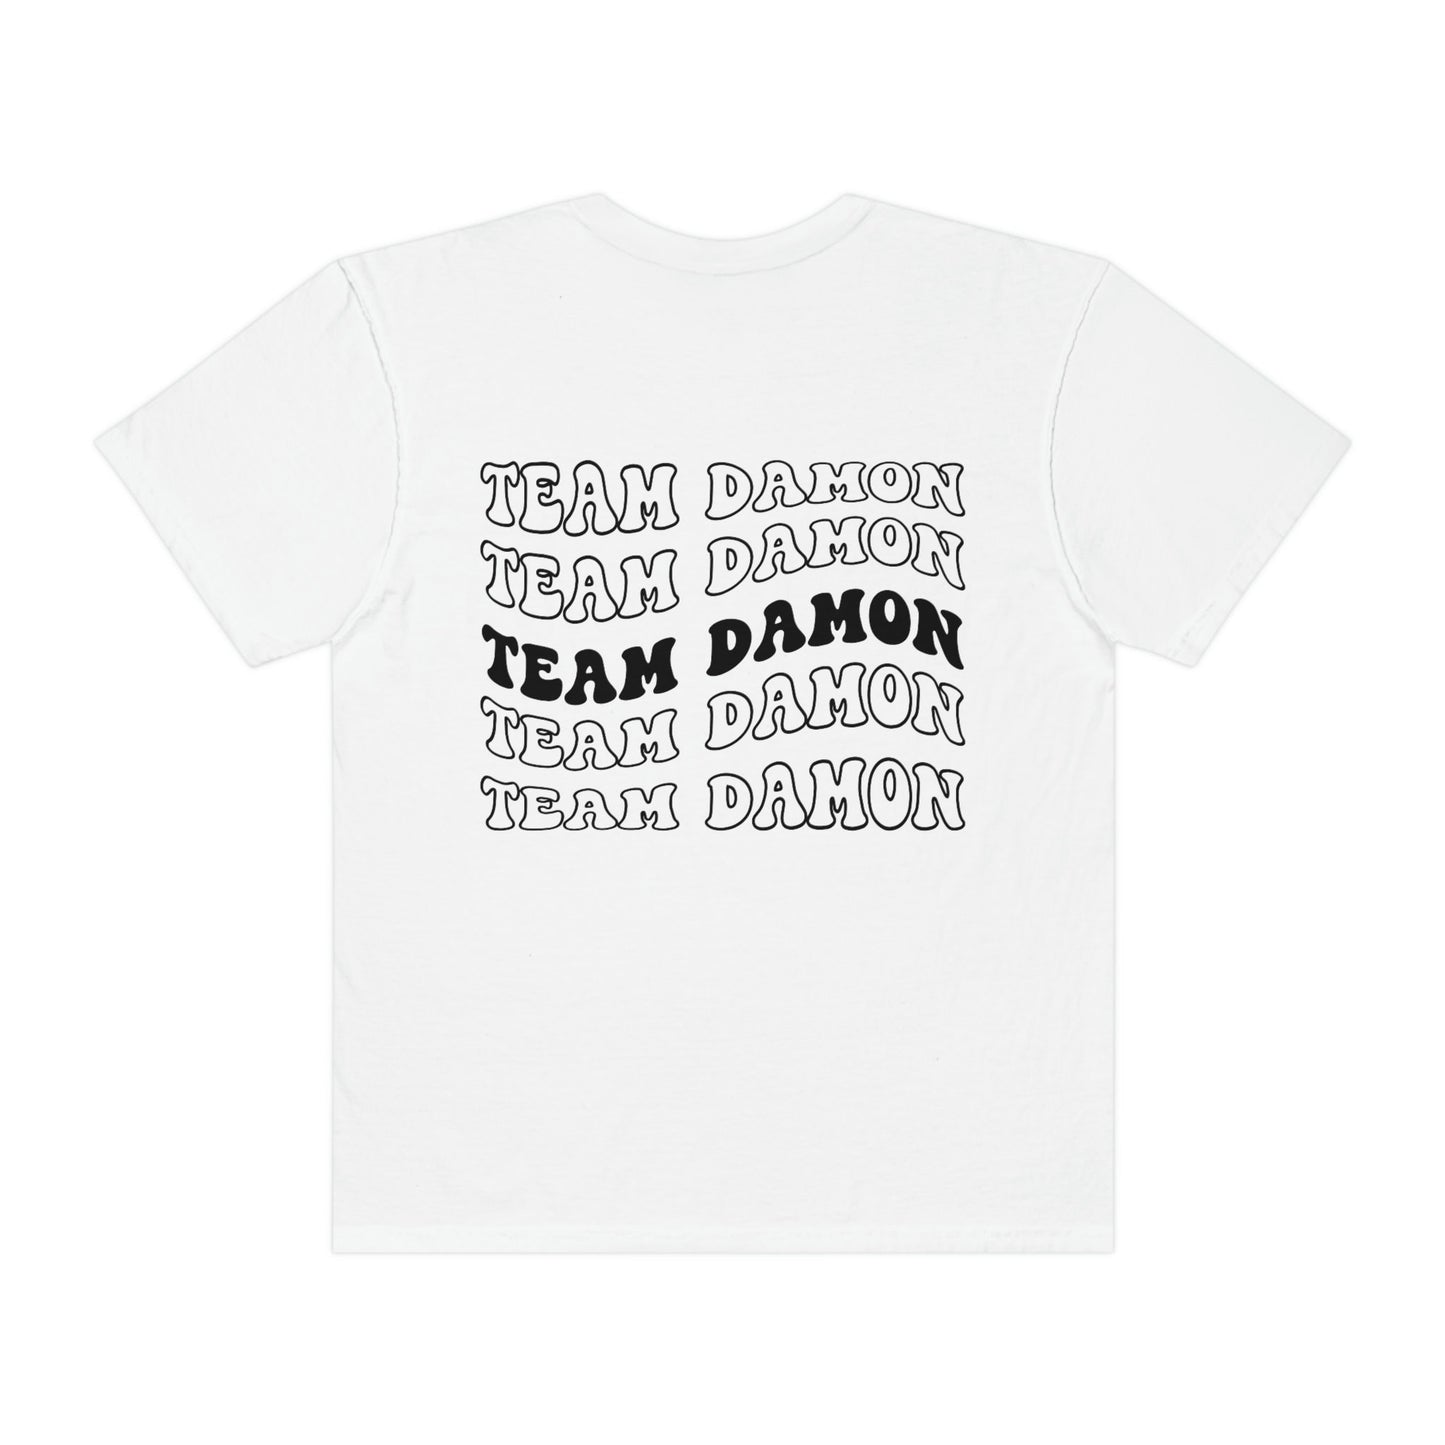 Damon Salvatore Shirt, Team Damon Shirt, TVD shirt, TVD fan gift, tvd merch, The Salvatore brothers, Mystic Falls shirt